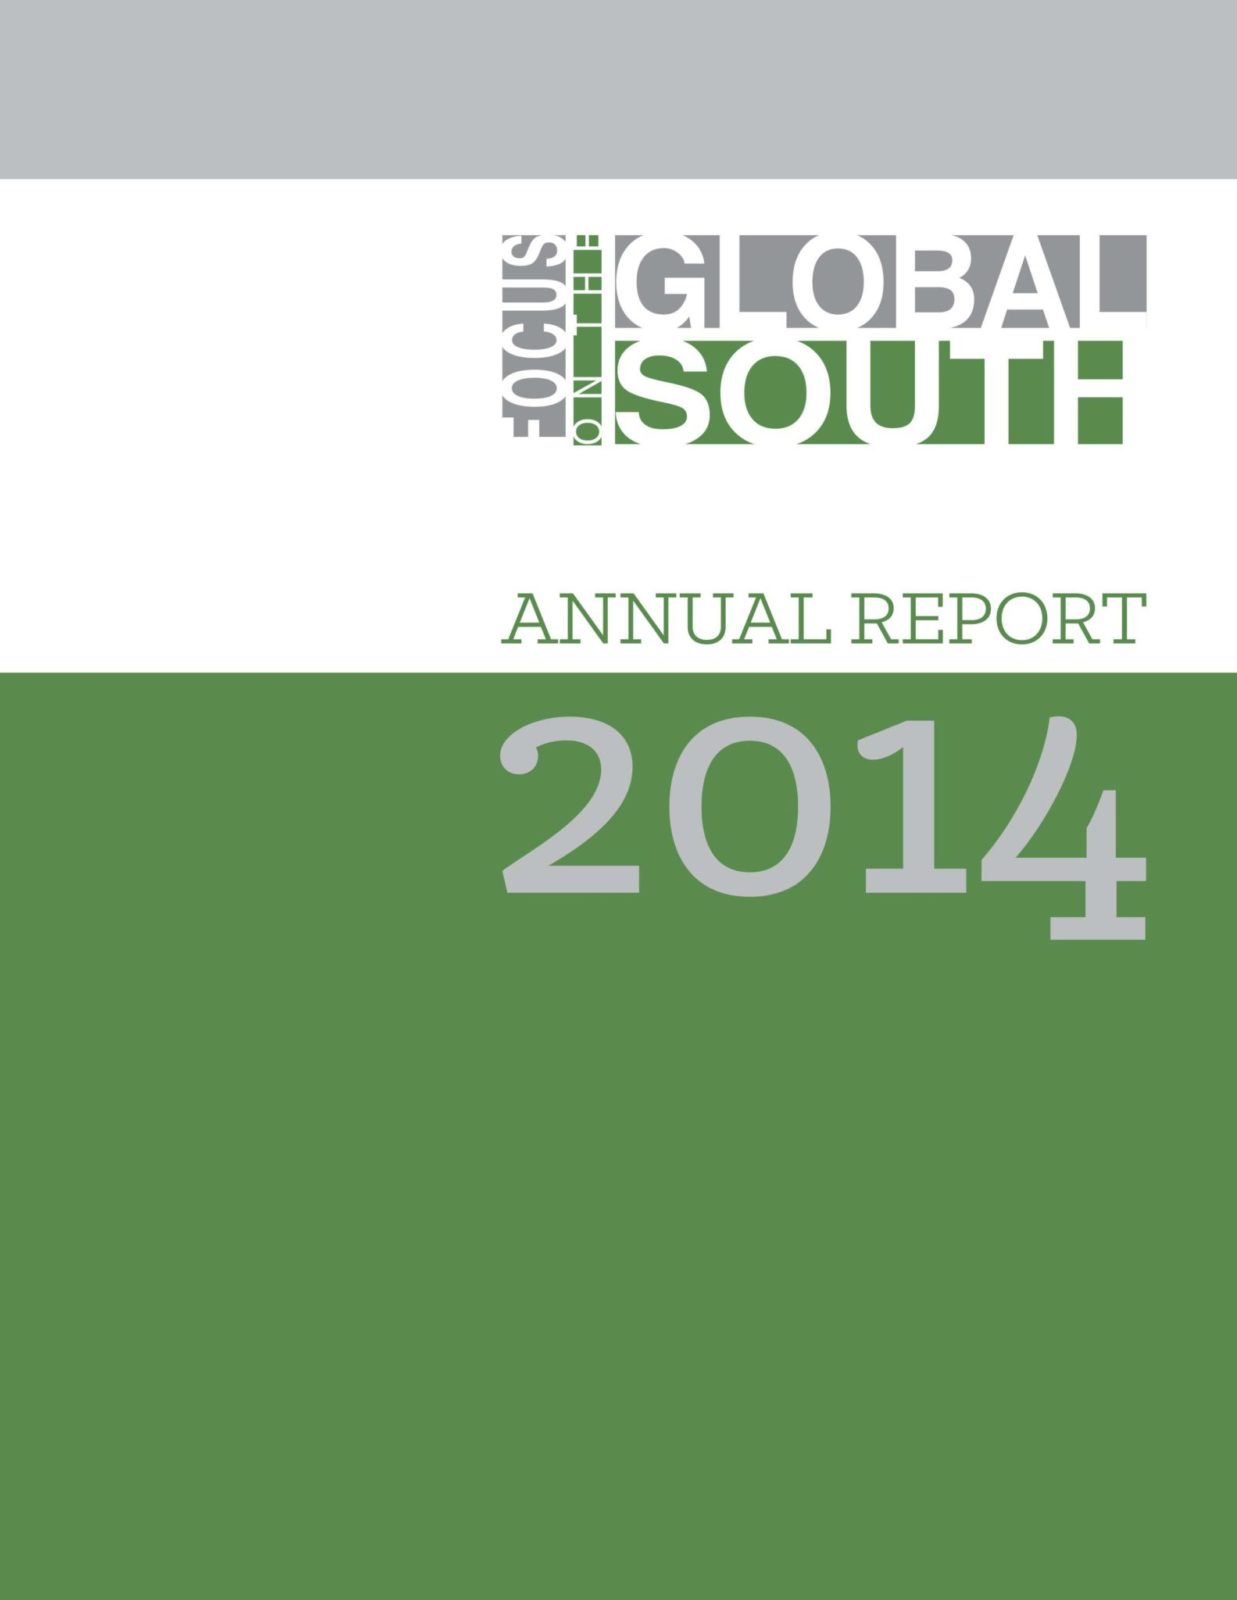 Annual Report Cover 2014